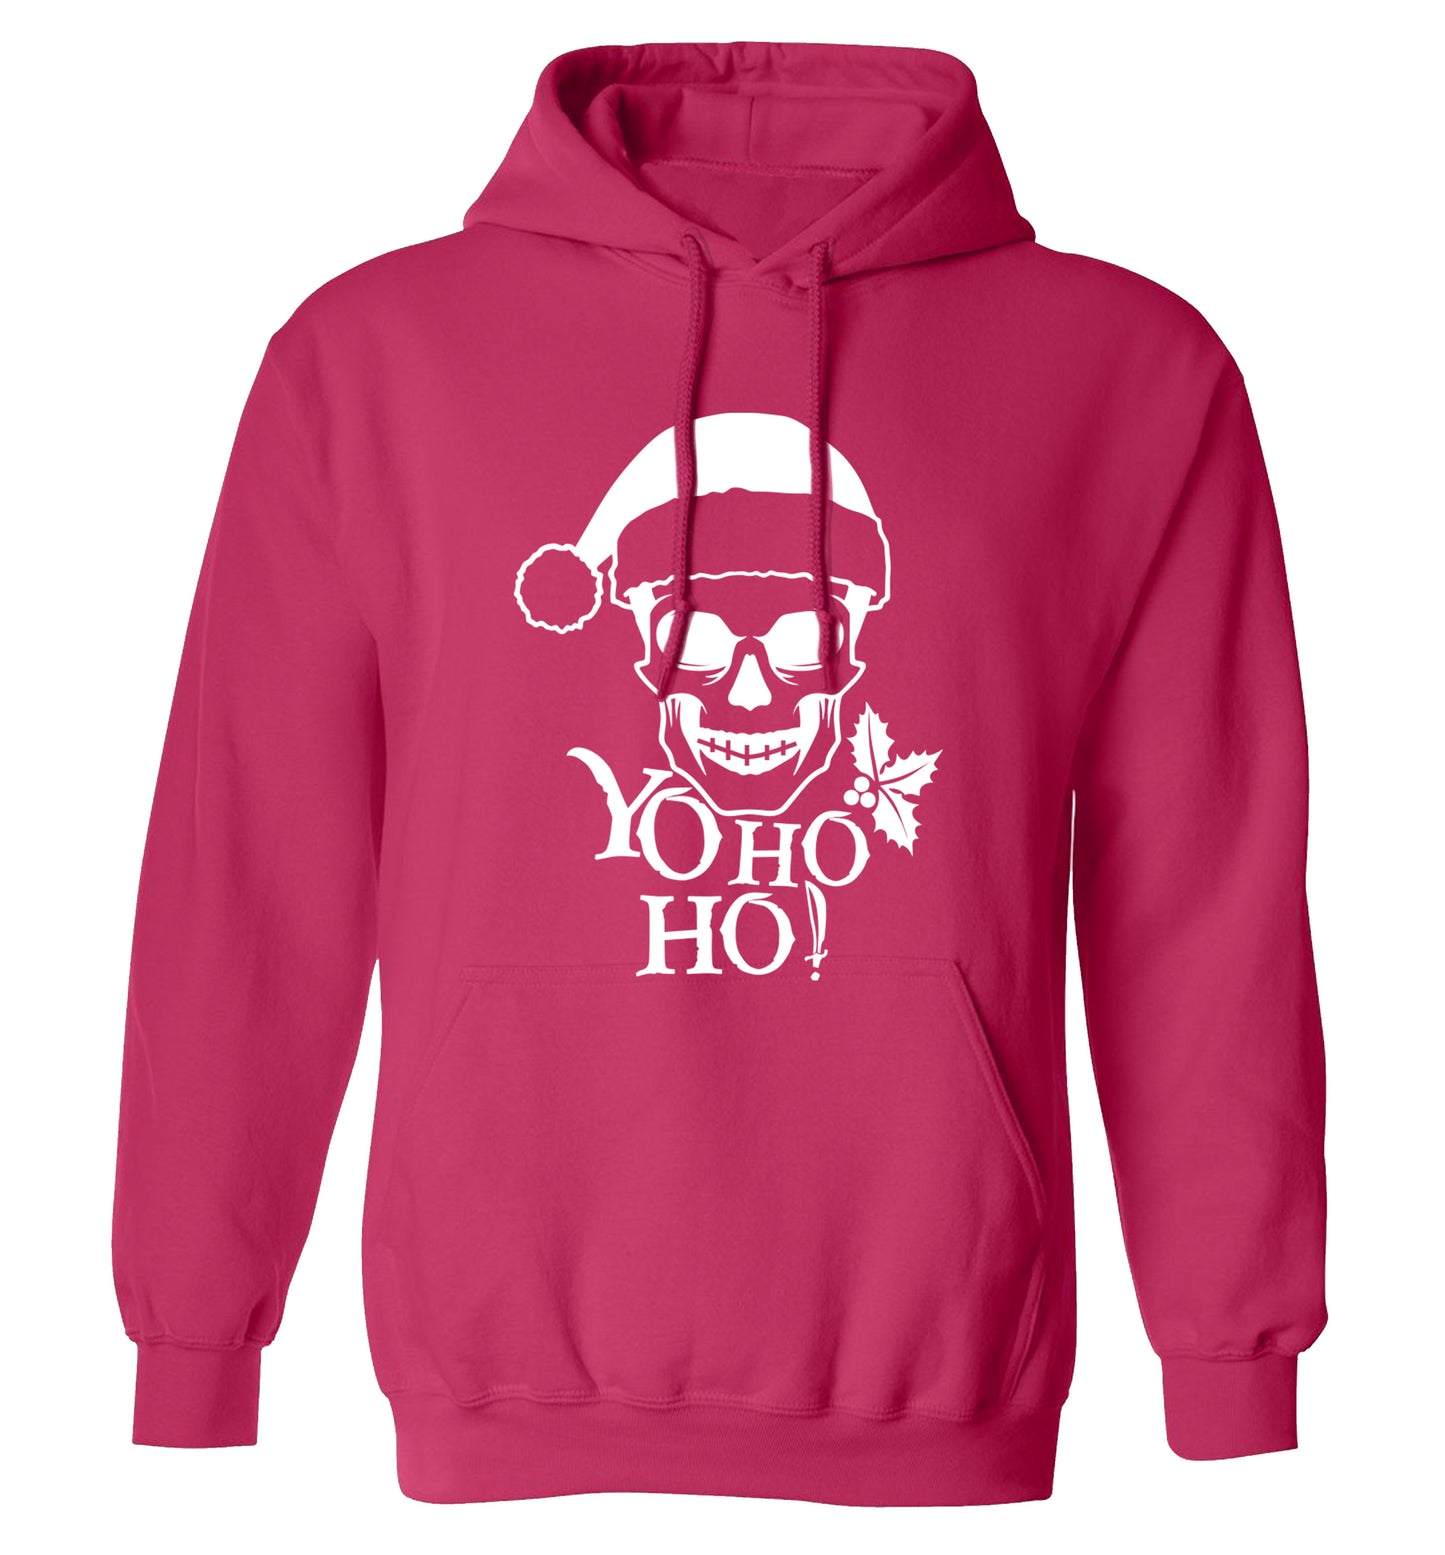 Yo ho ho! adults unisex pink hoodie 2XL